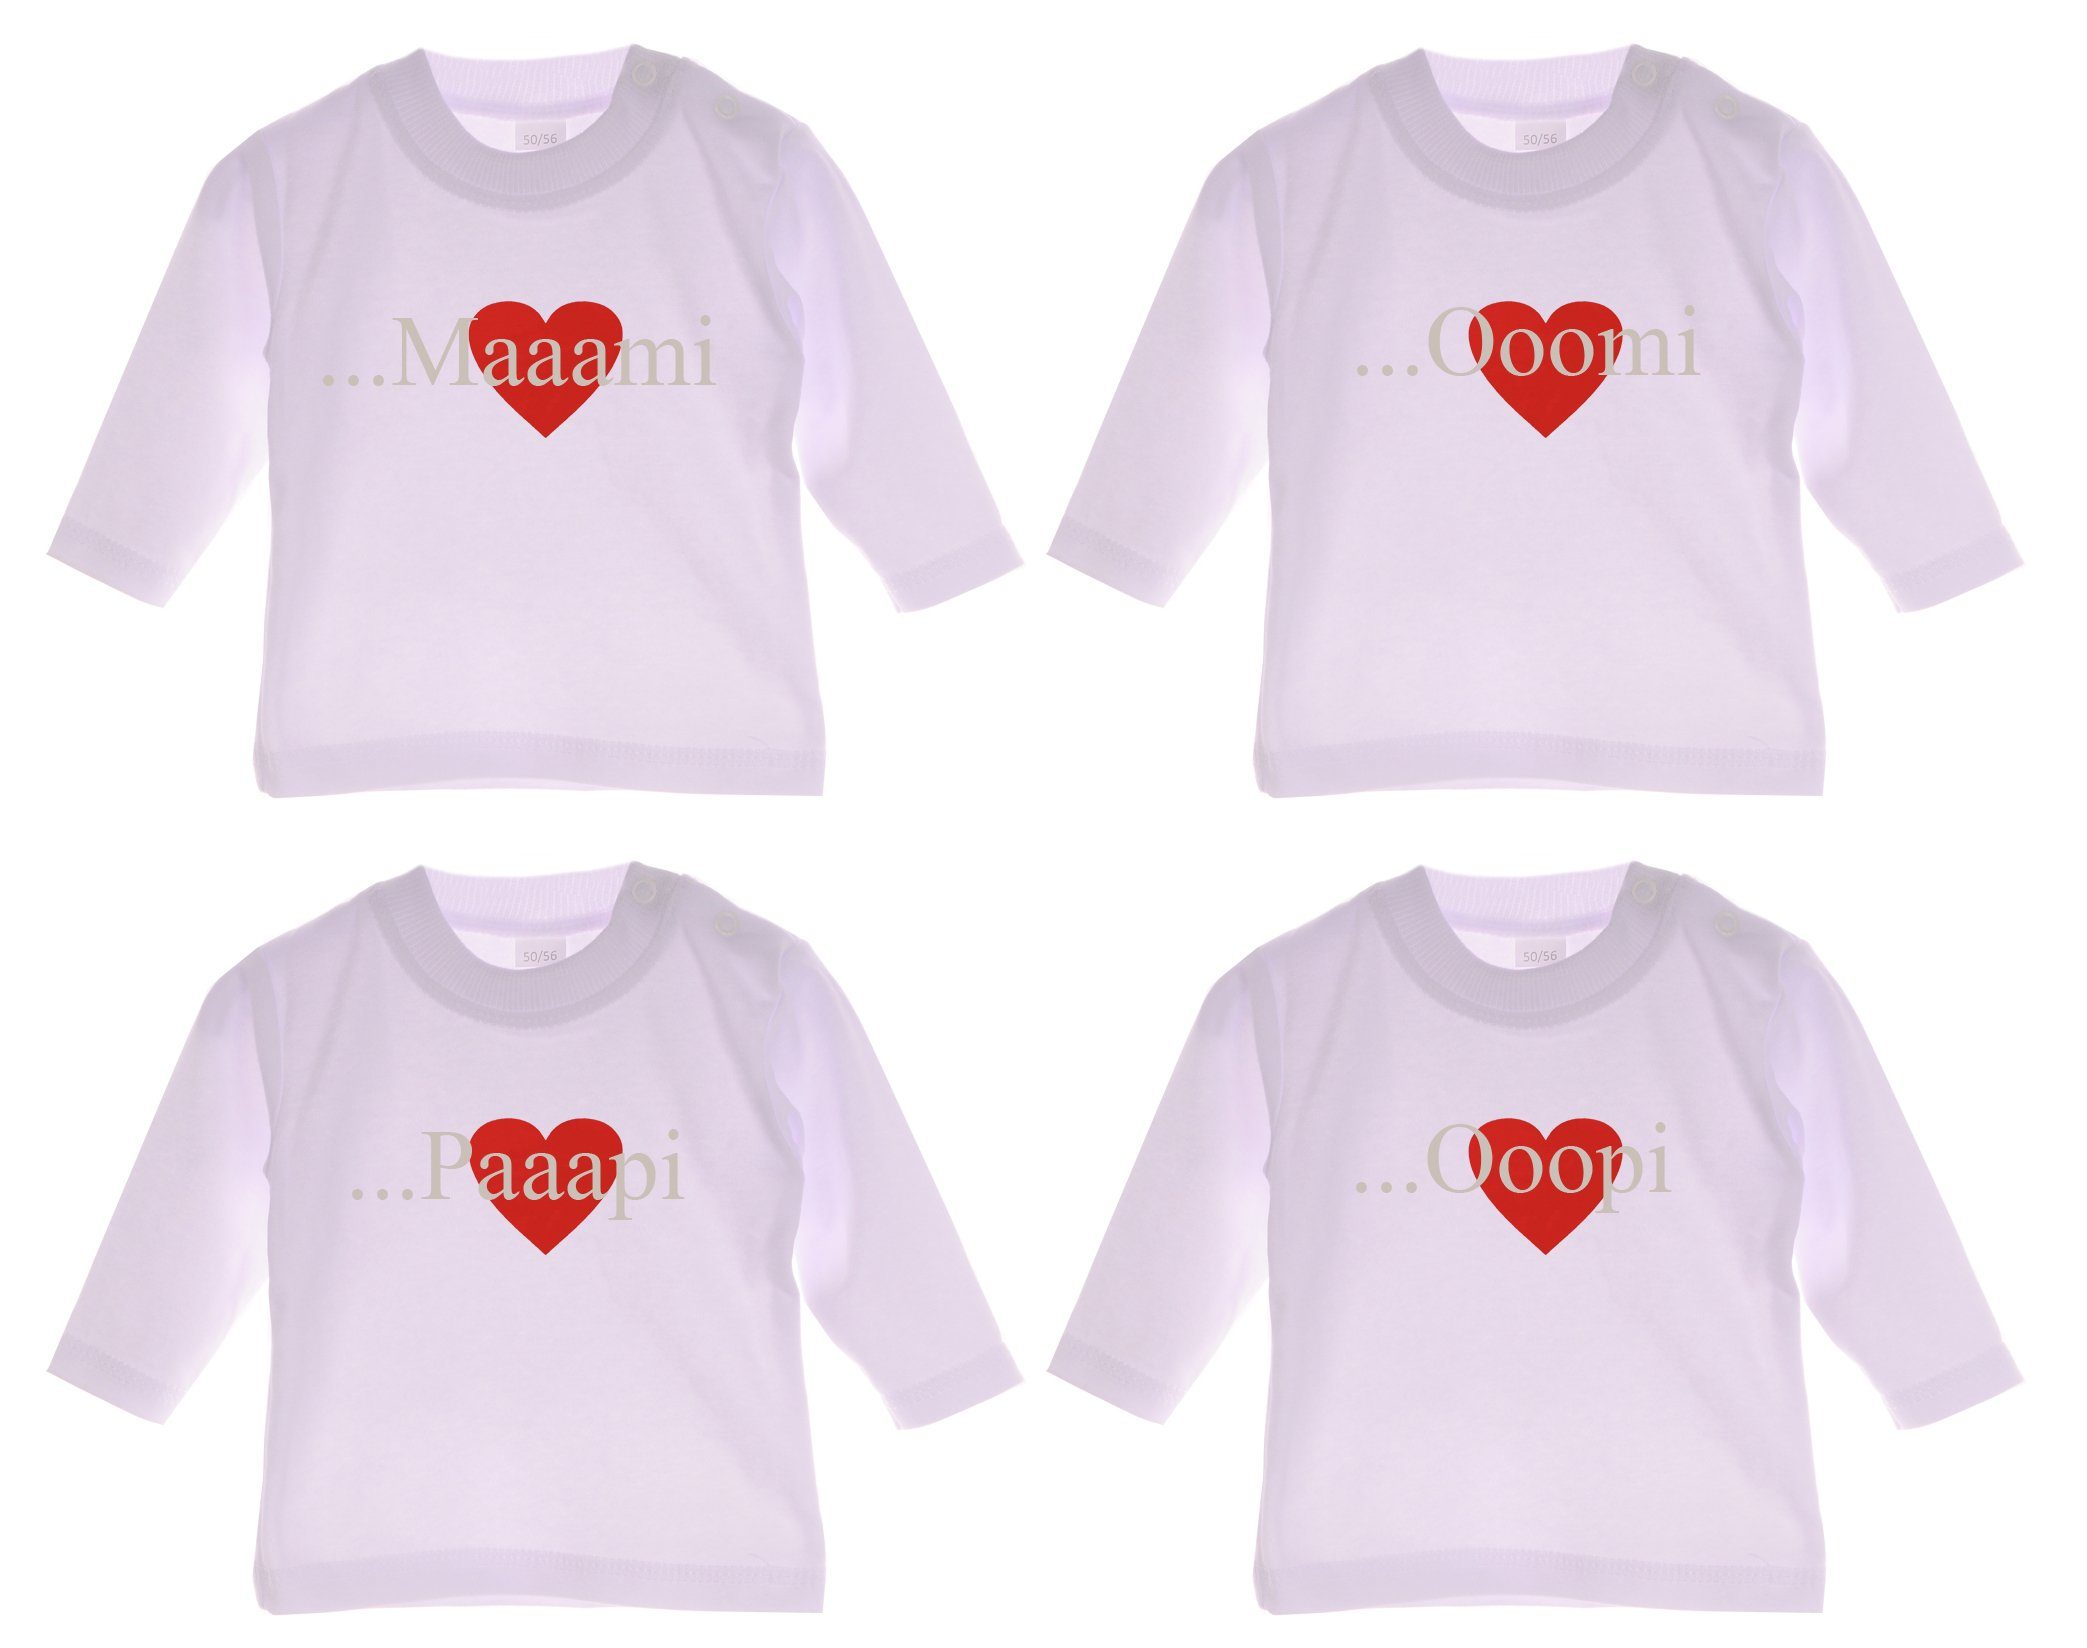 La Bortini Langarmshirt Baby T-Shirt Langarmshirt in weiß Erstlingsshirt für Neugeborene Maaami